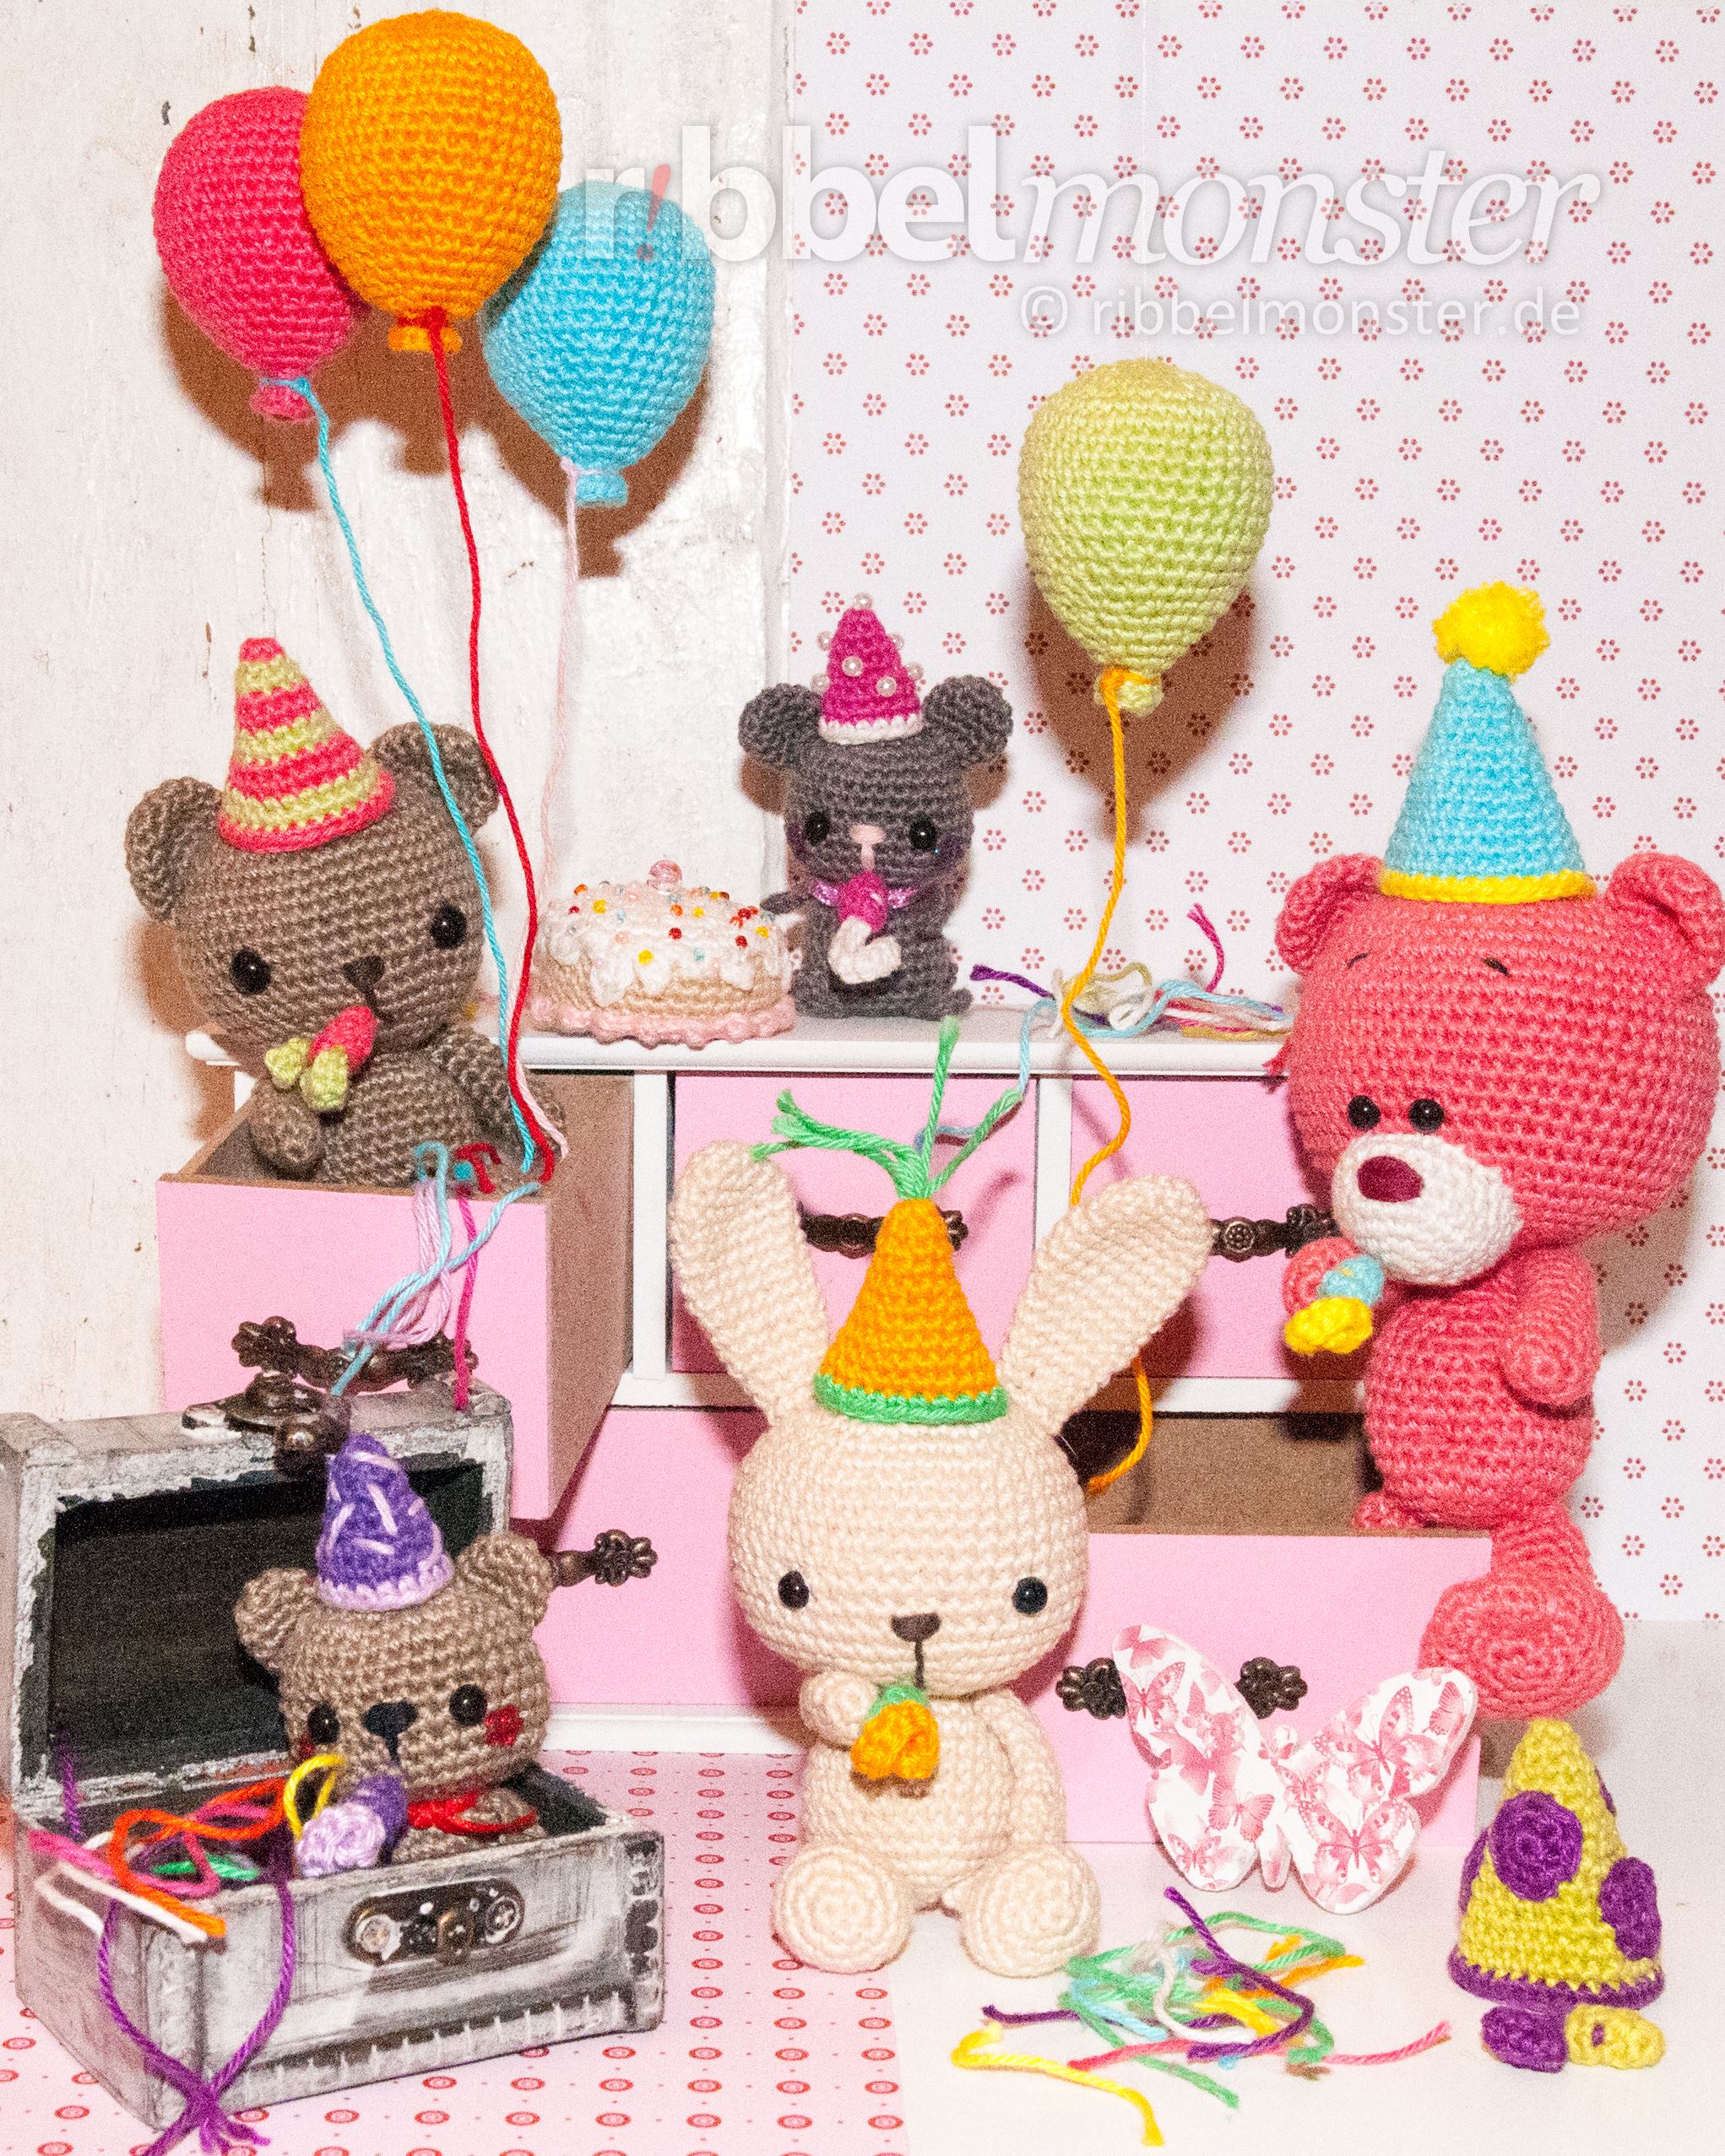 Amigurumi – Crochet Birthday Party “3 Years”